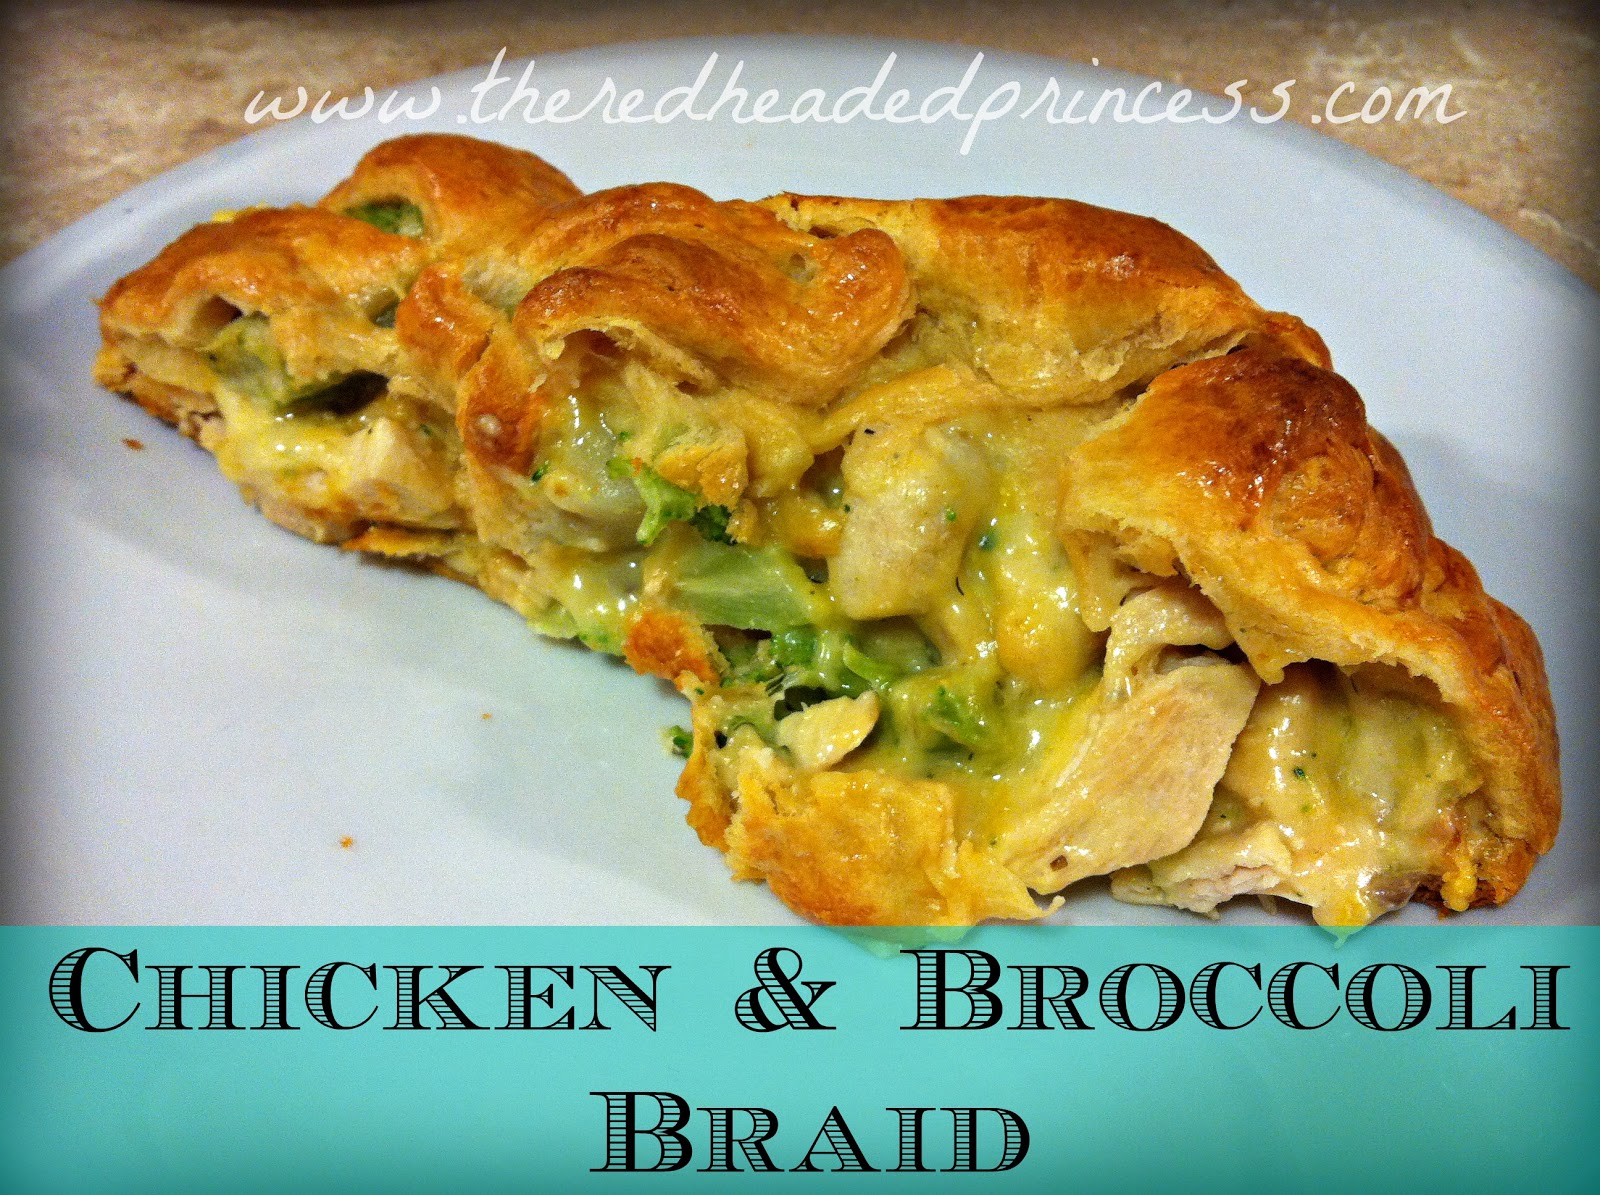 Chicken and Broccoli Braid